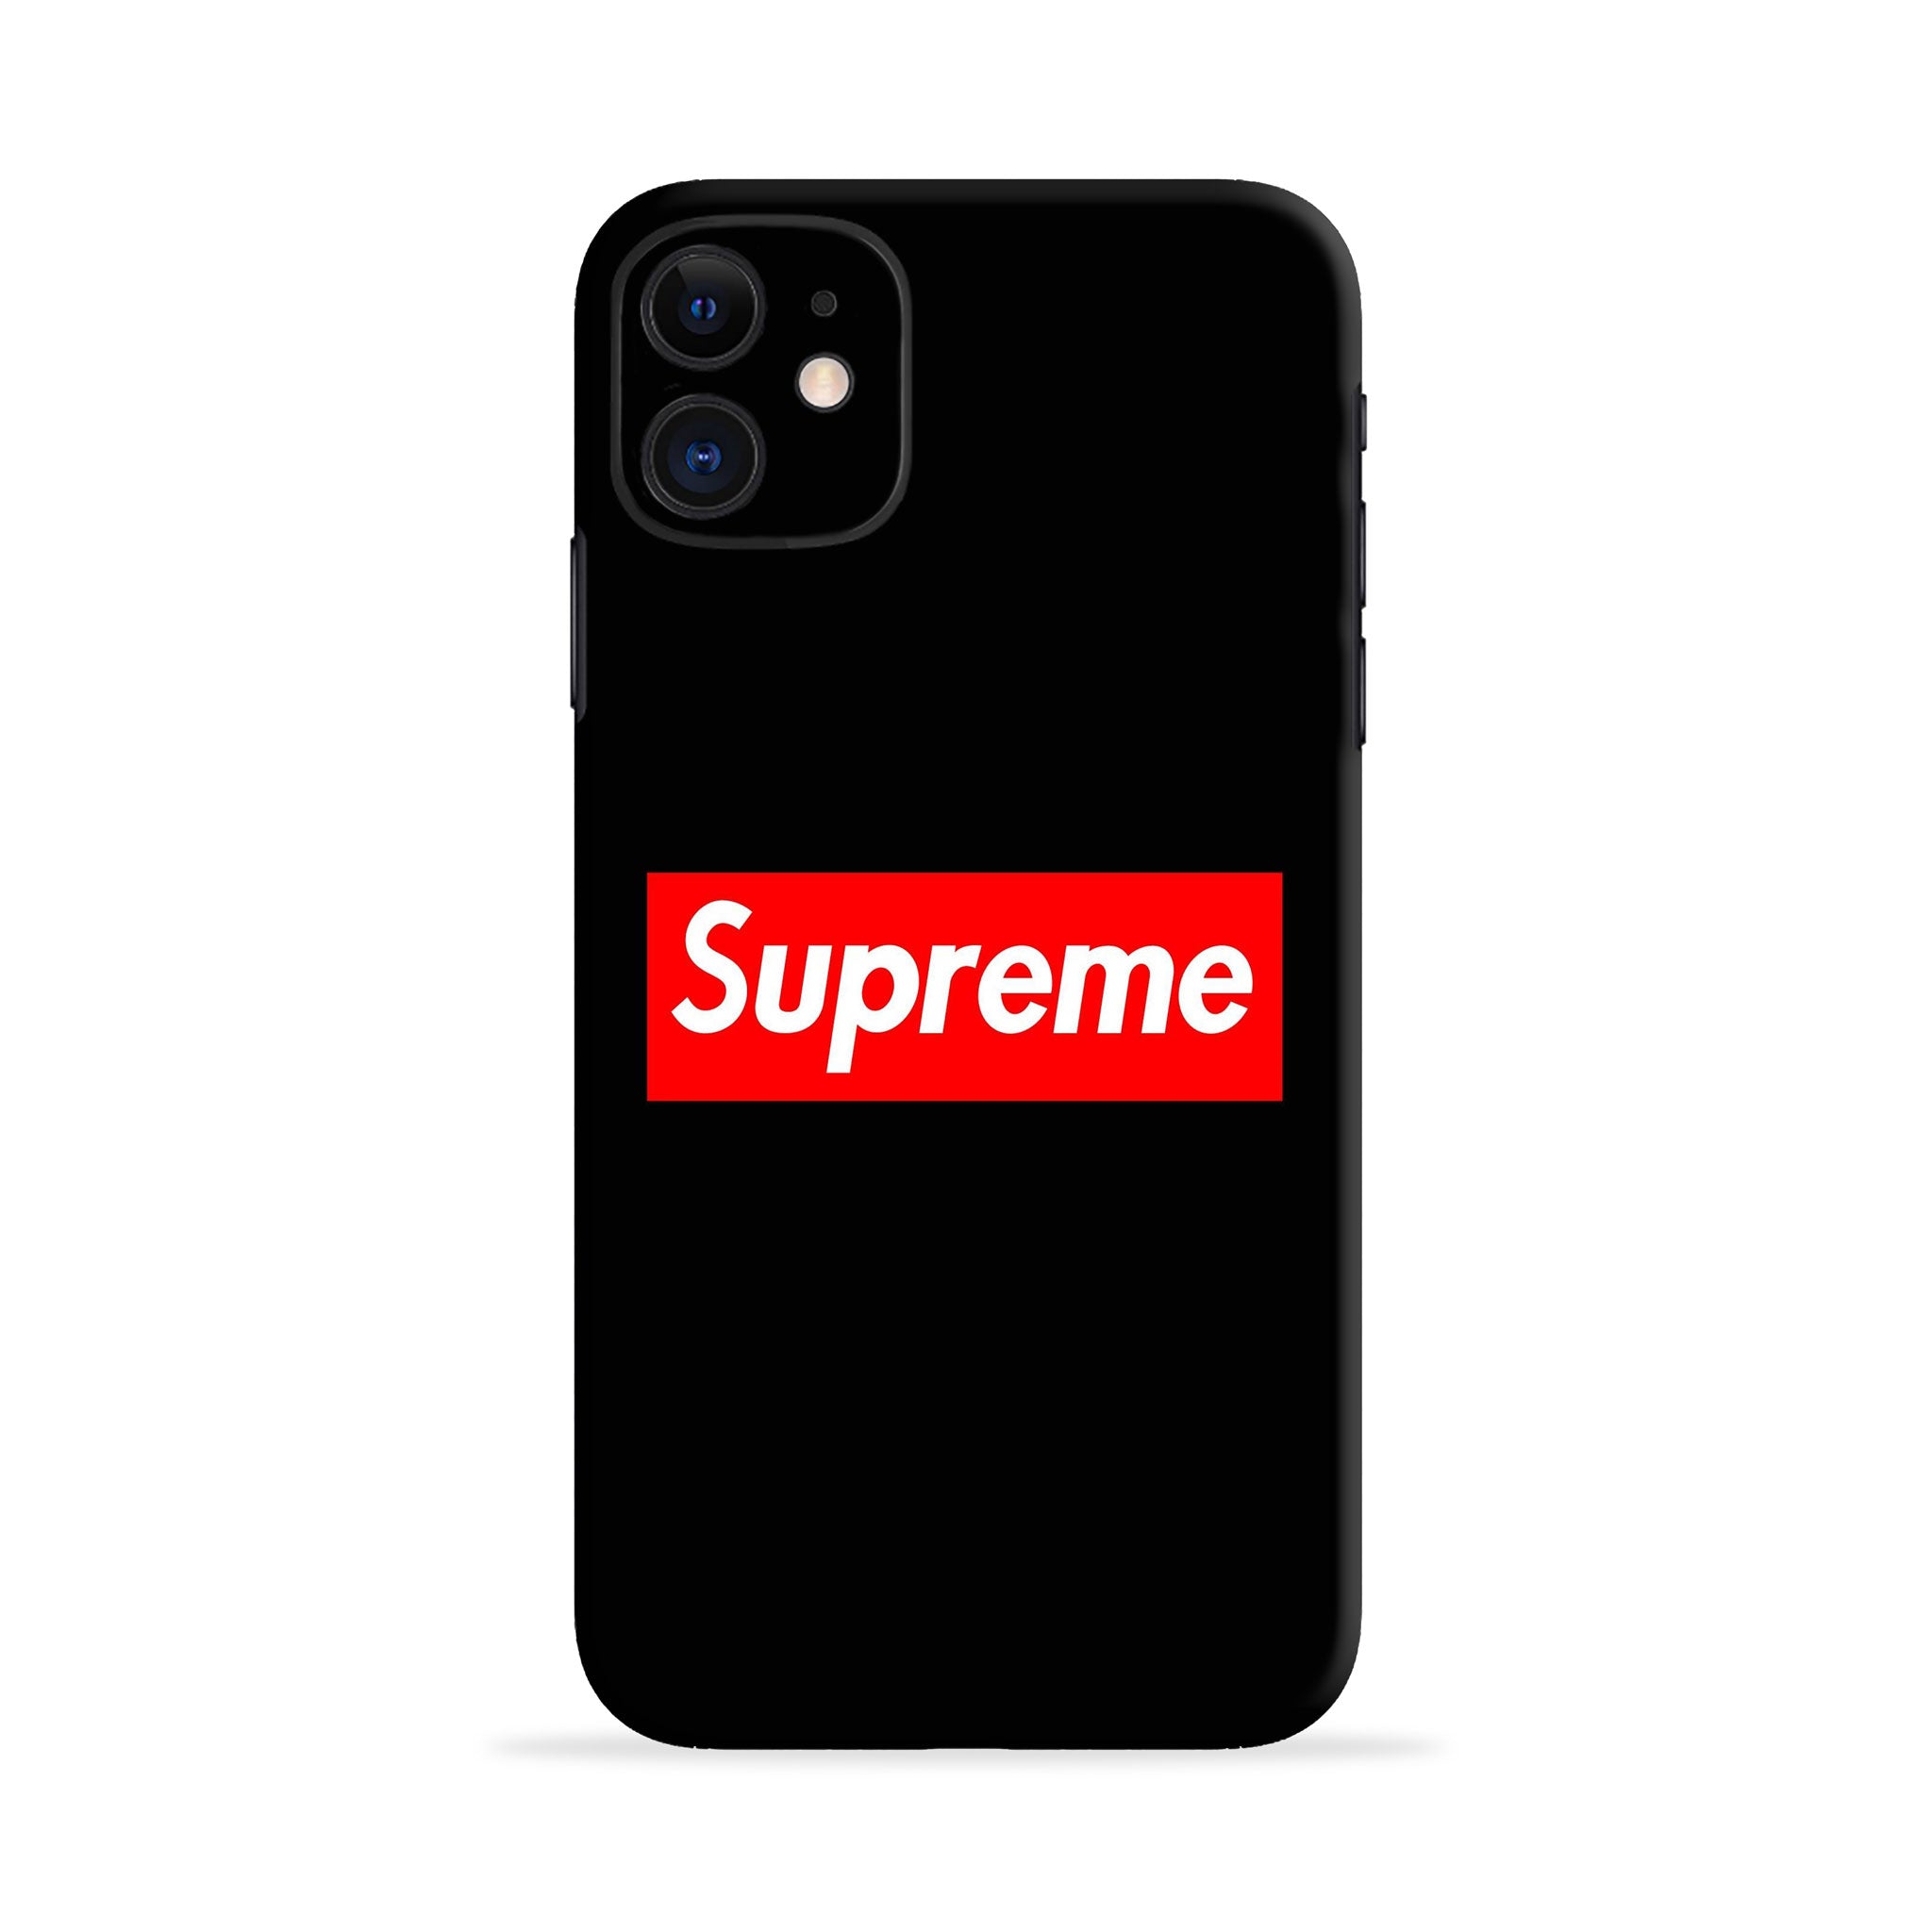 supreme iphone 11 pro